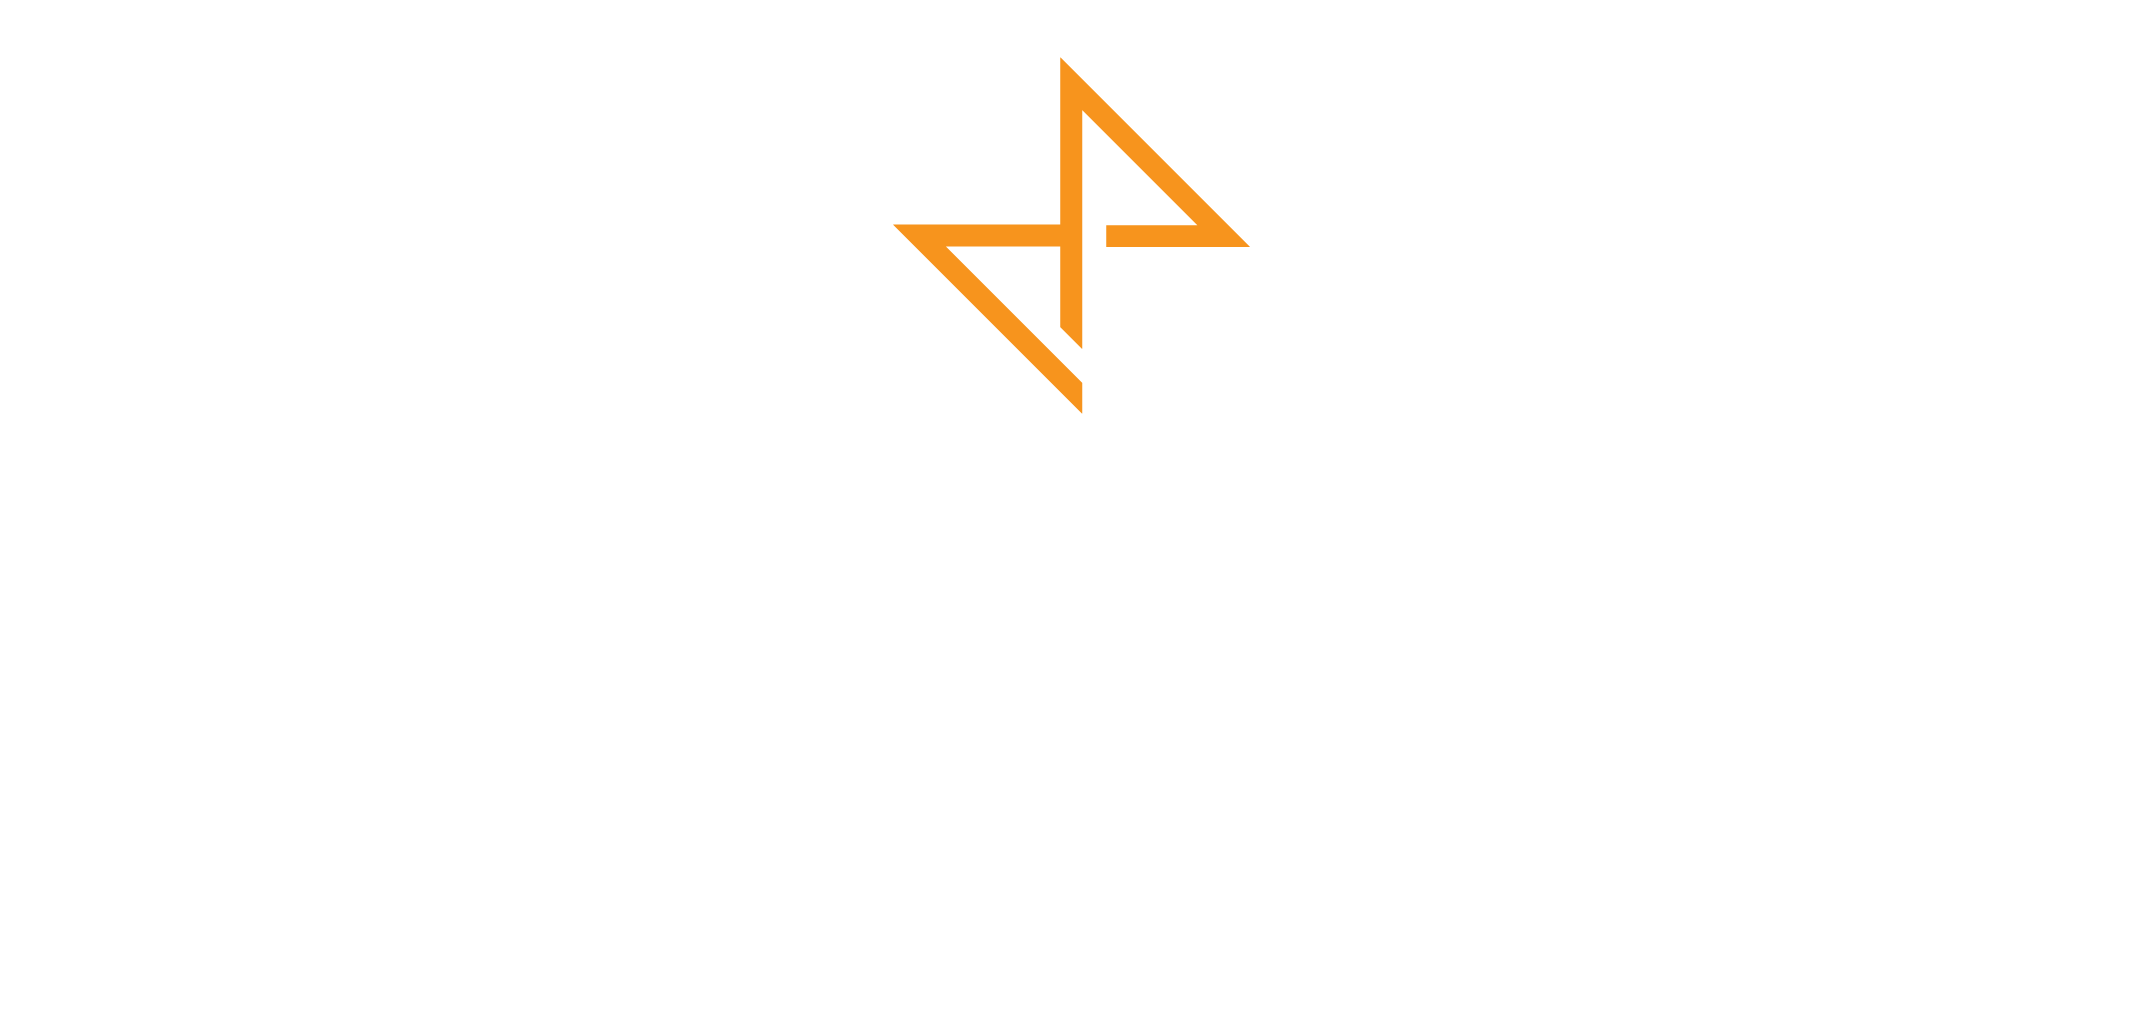 Alter Property Management